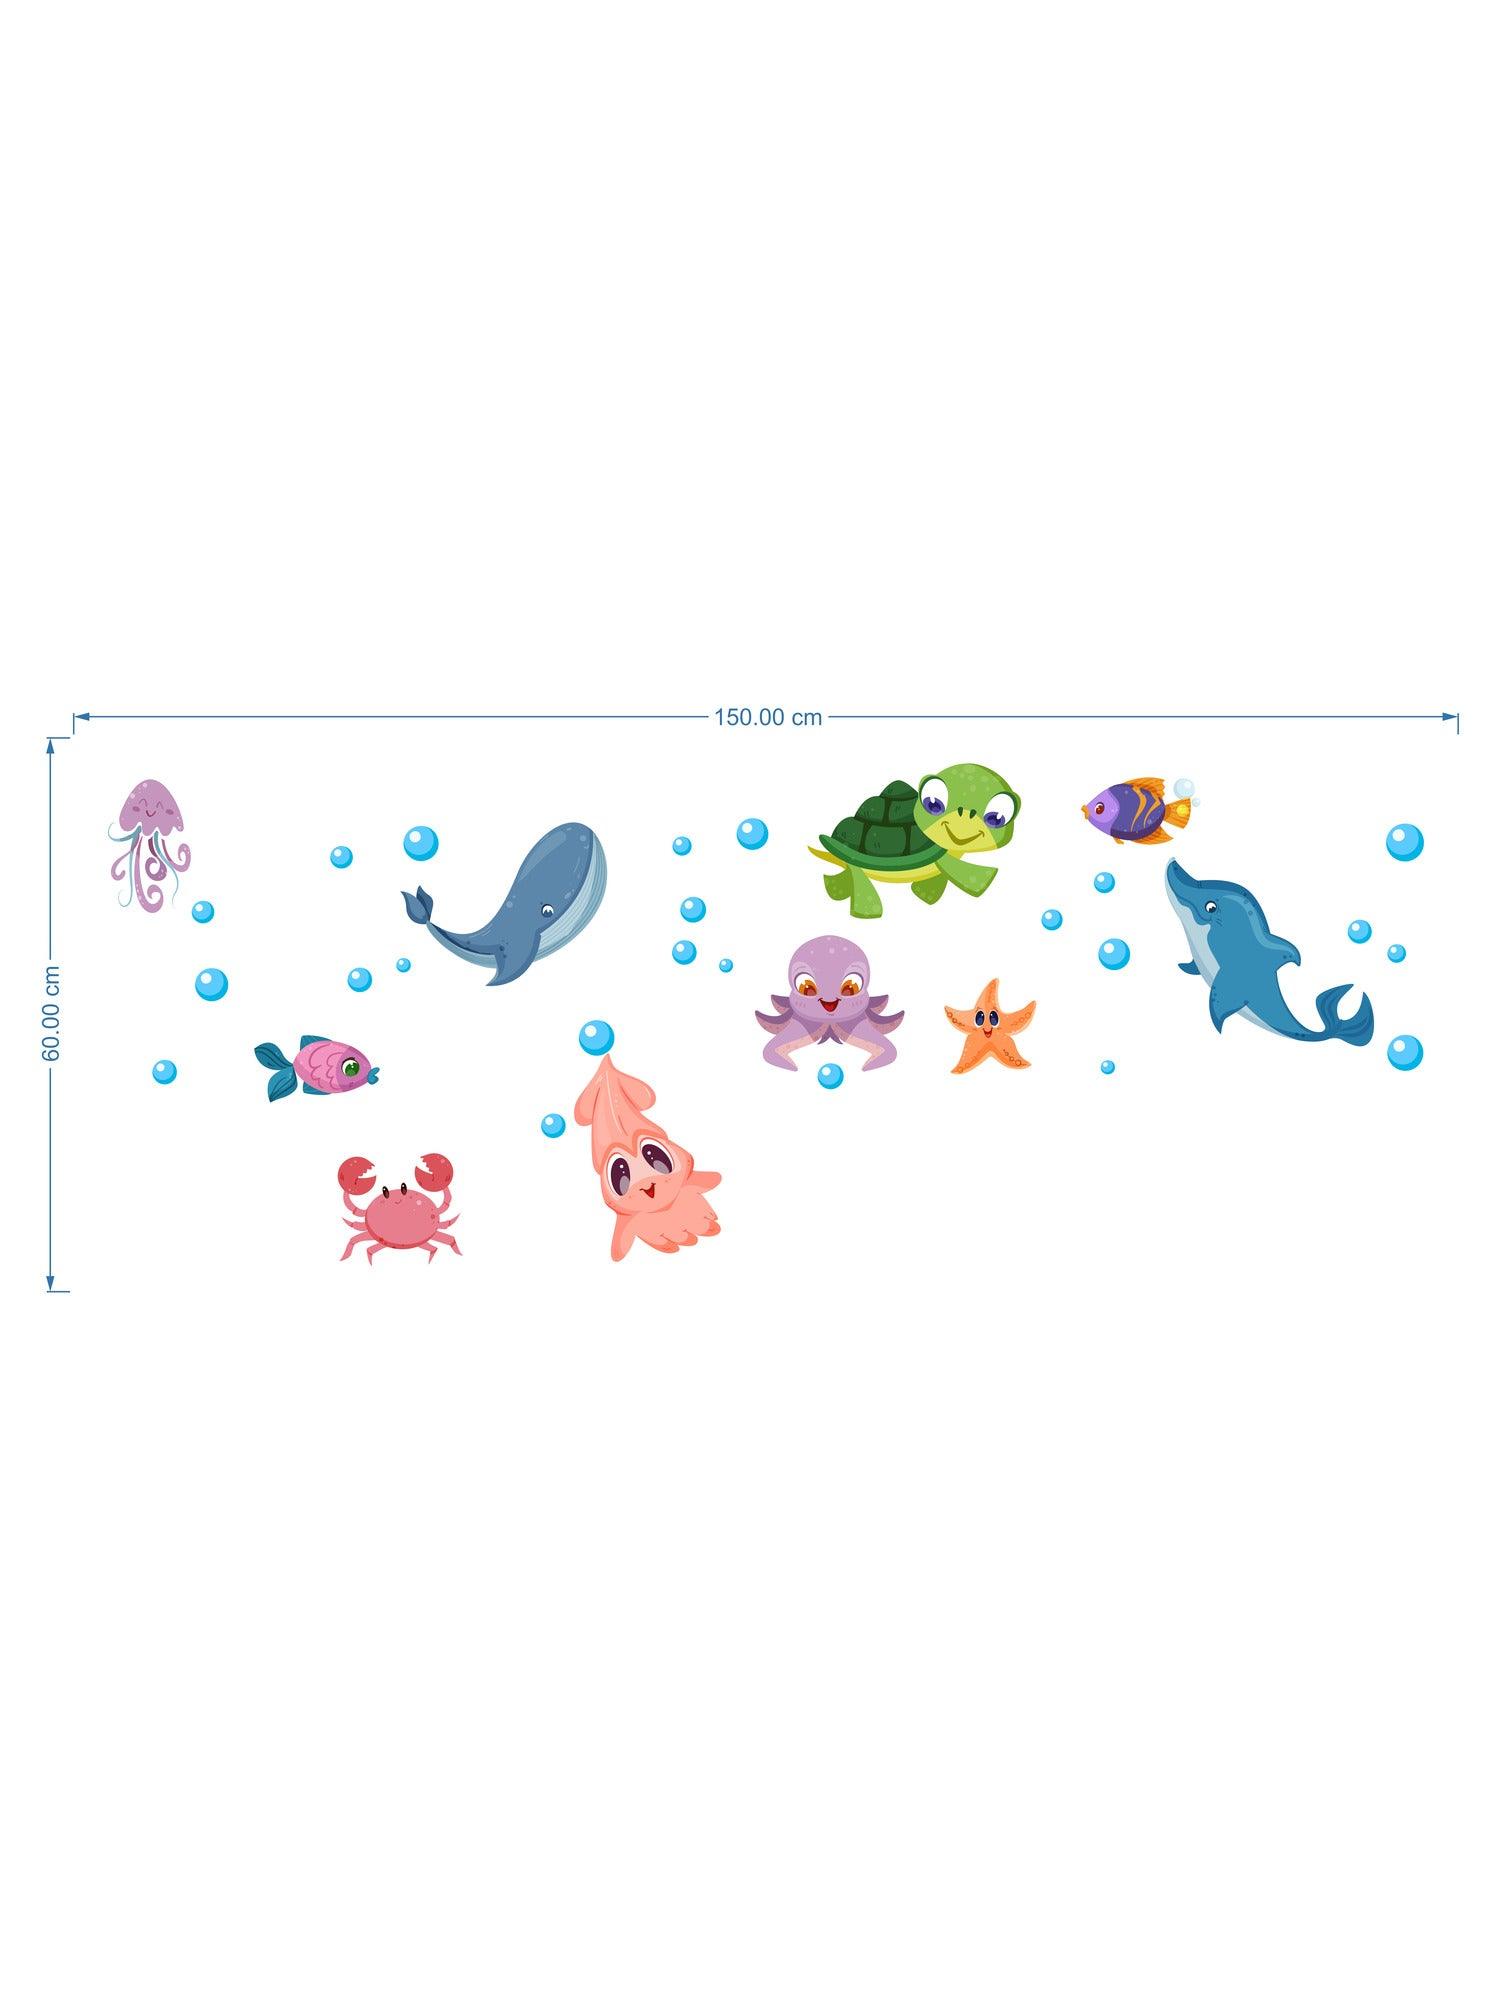 Cute Aquarium Animals Wall Sticker (150 x 60 cm) - Rangoli